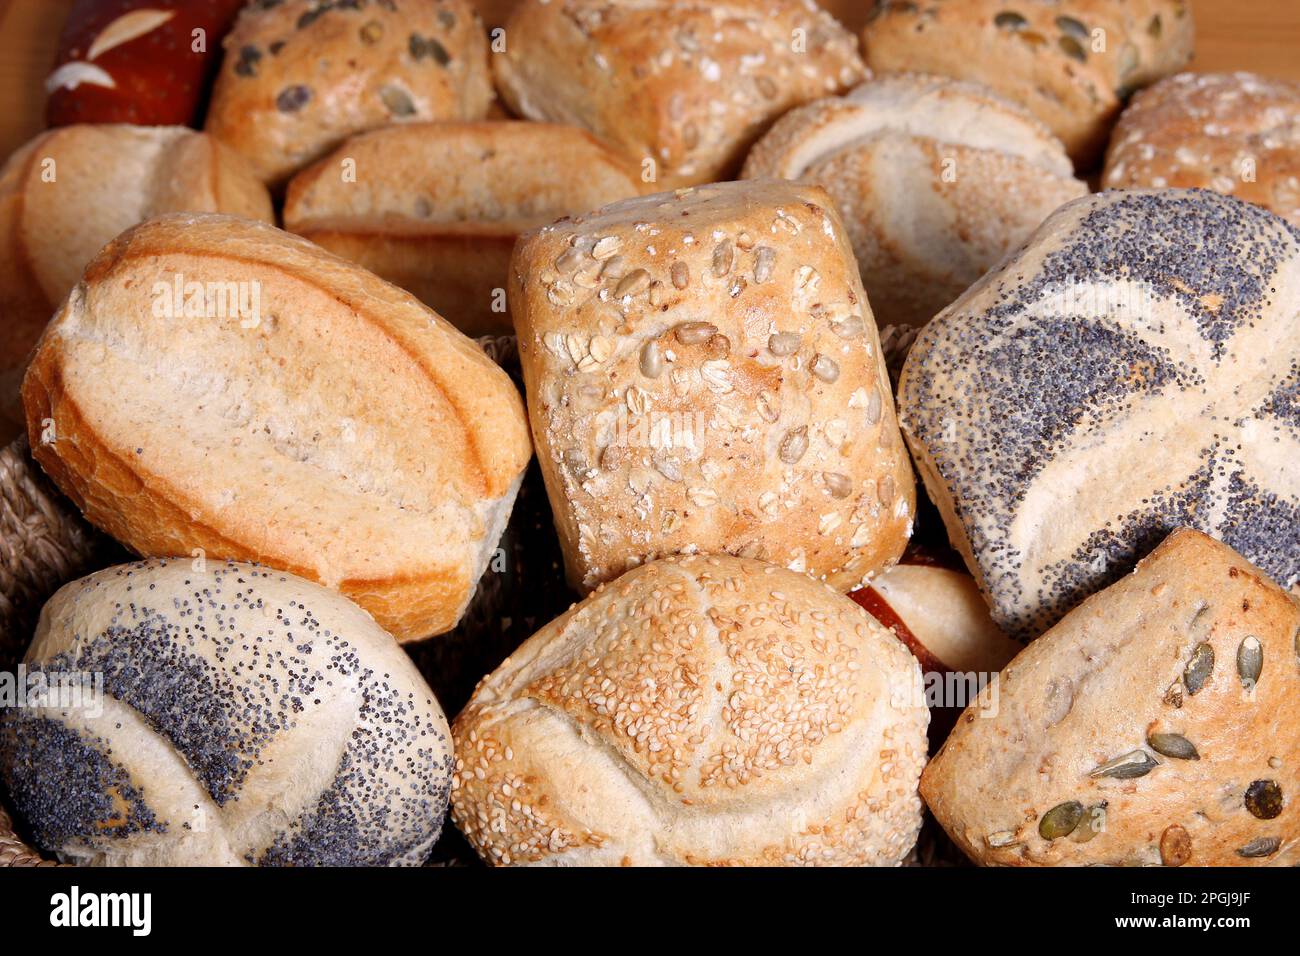 various fresh bread rolls Stock Photo